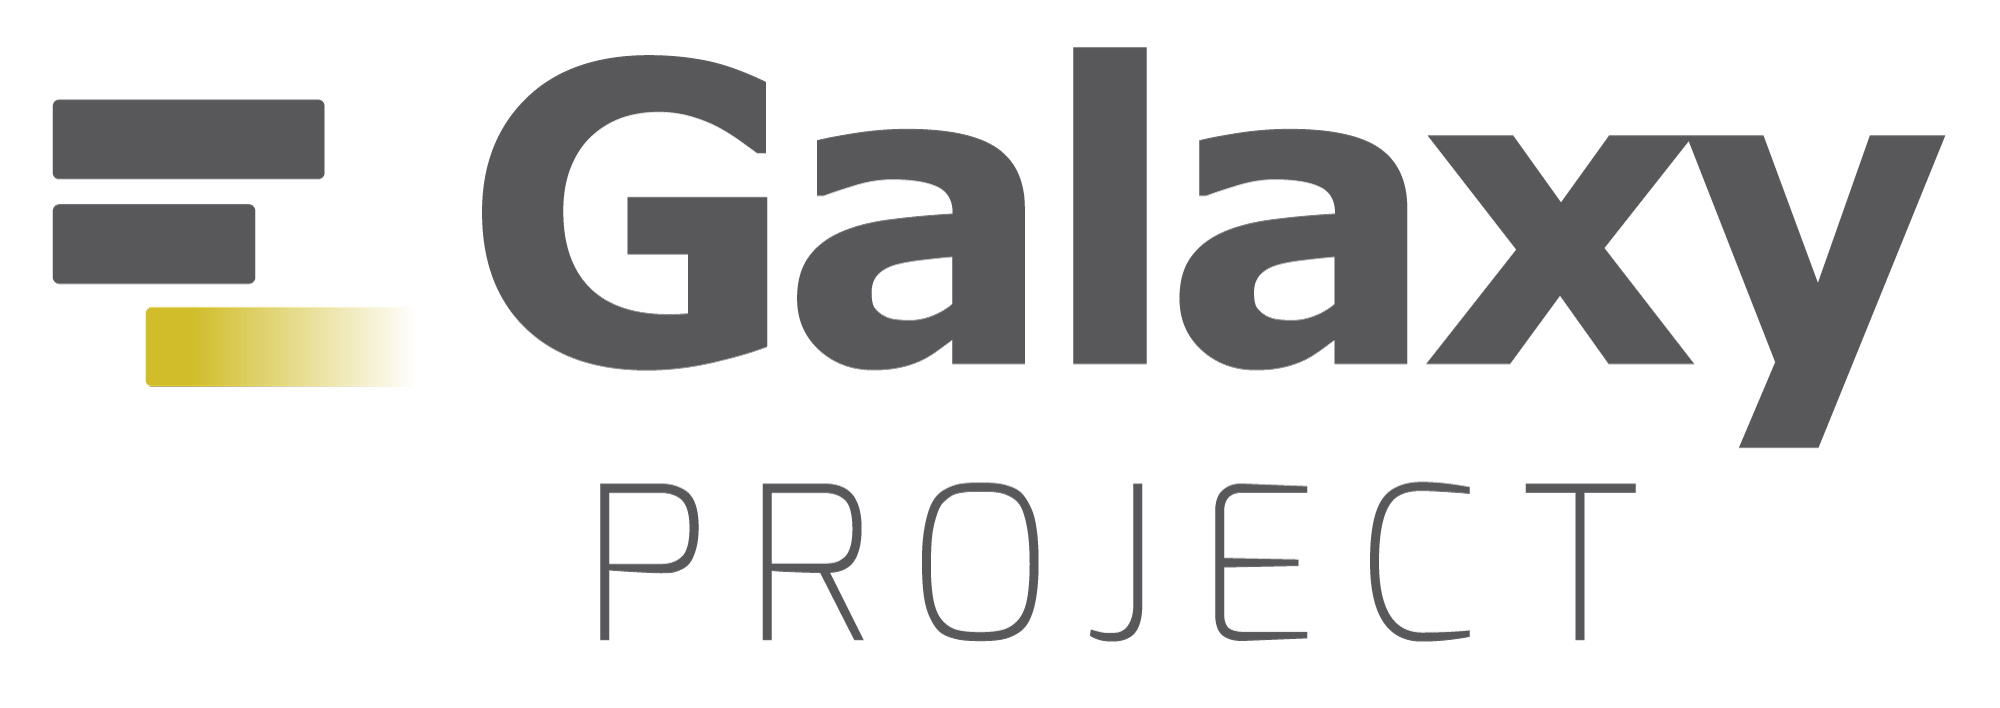 Galaxy Project Logo